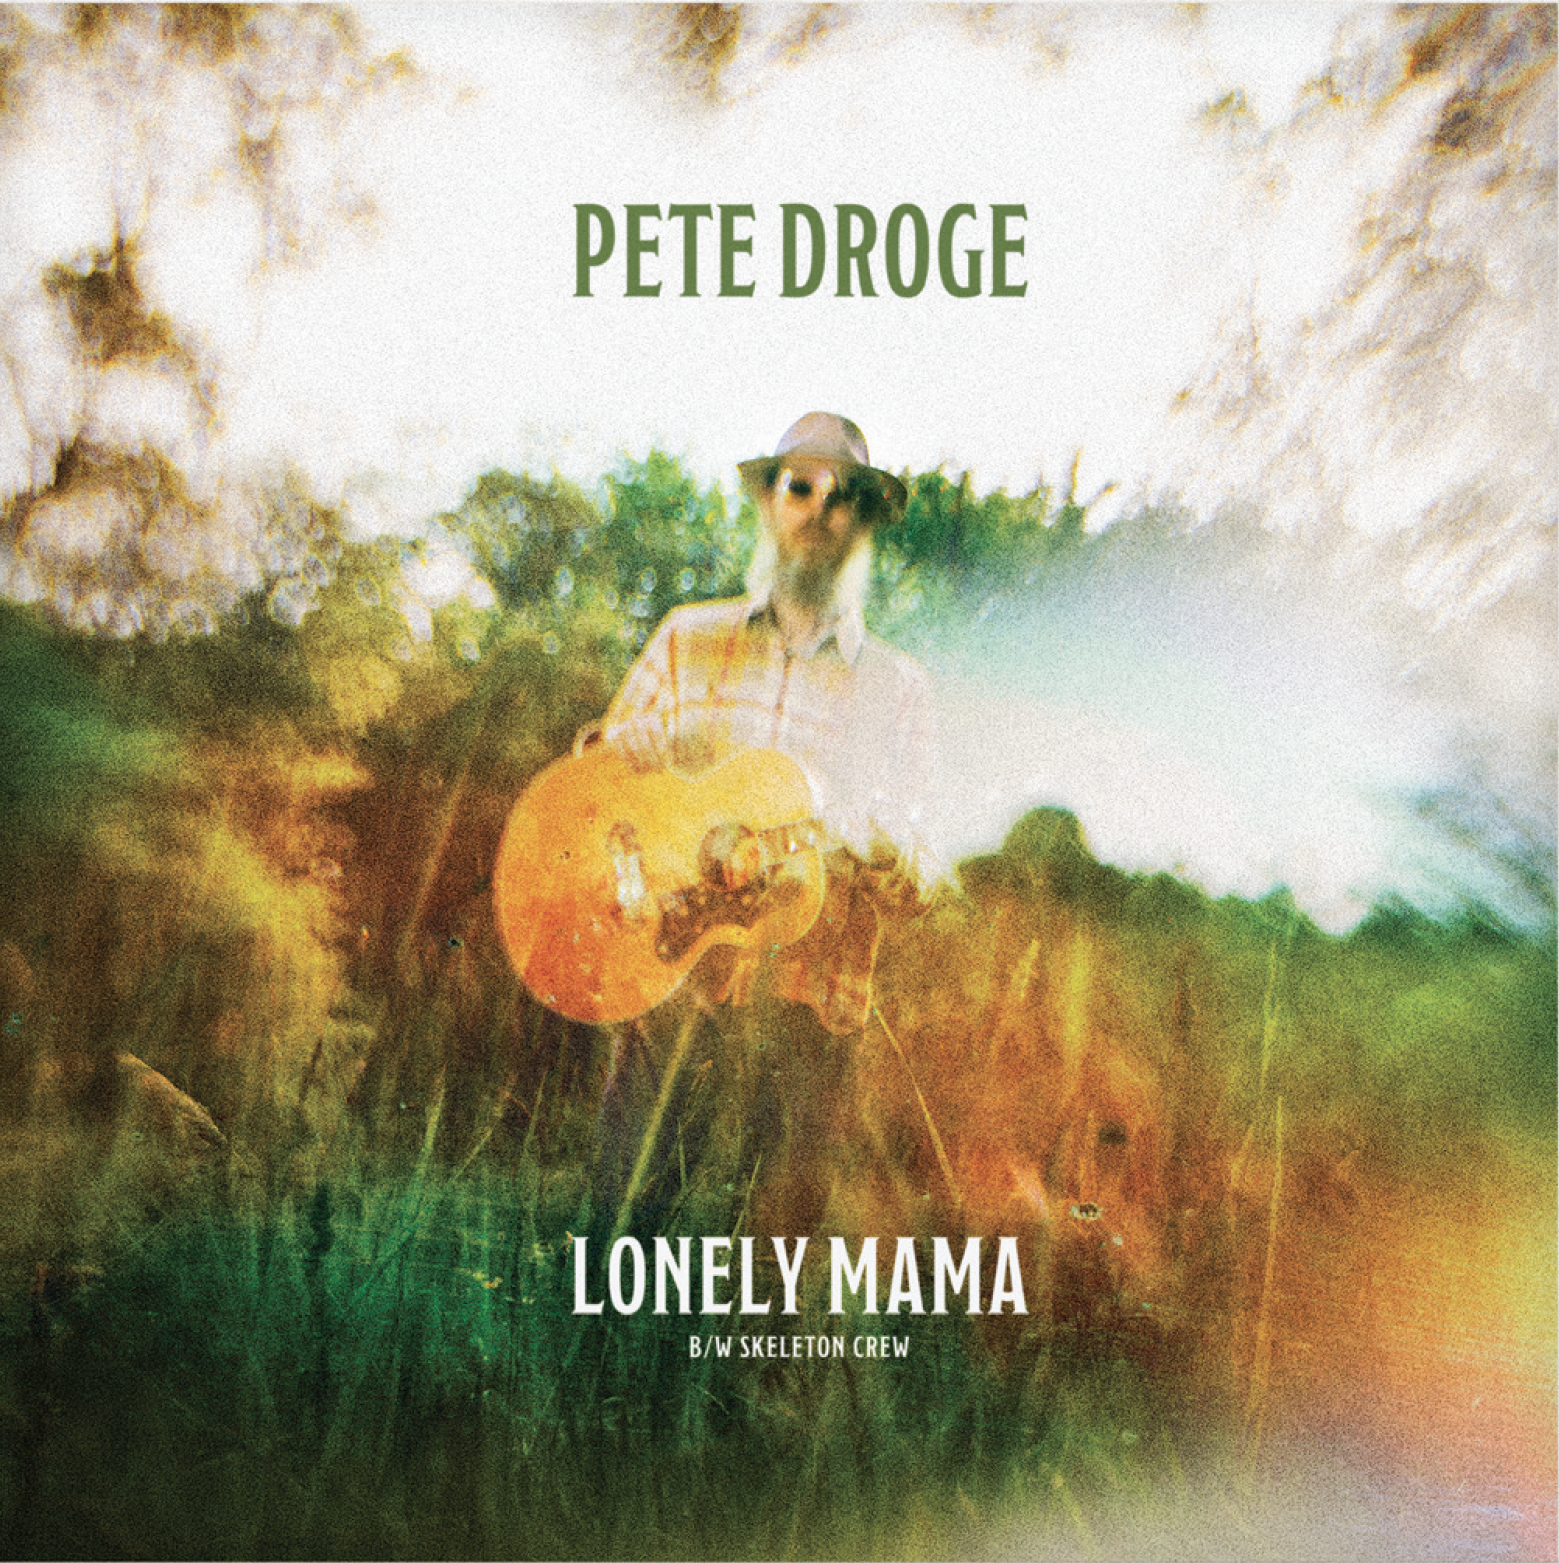 Pete Droge Lonely Mama b/w Skeleton Crew 7